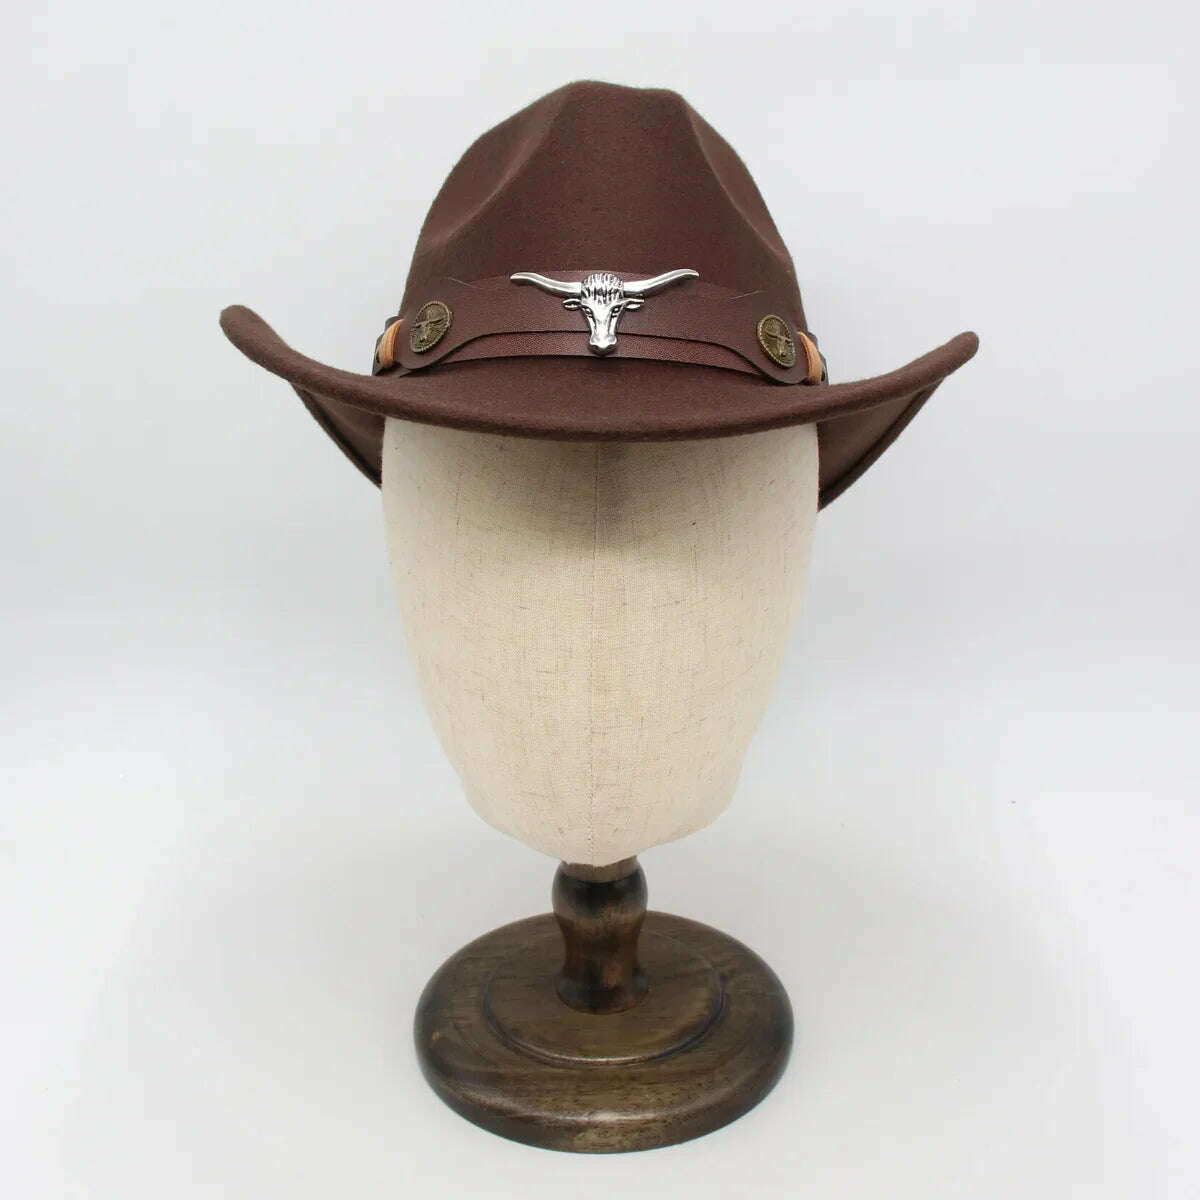 KIMLUD, Western Cowboy Black Hat With Bull Decor Classic Wide Brim Jazz Imitation Wool Hats For Women Felt Hats With Cow Head Knight Hat, KIMLUD Womens Clothes